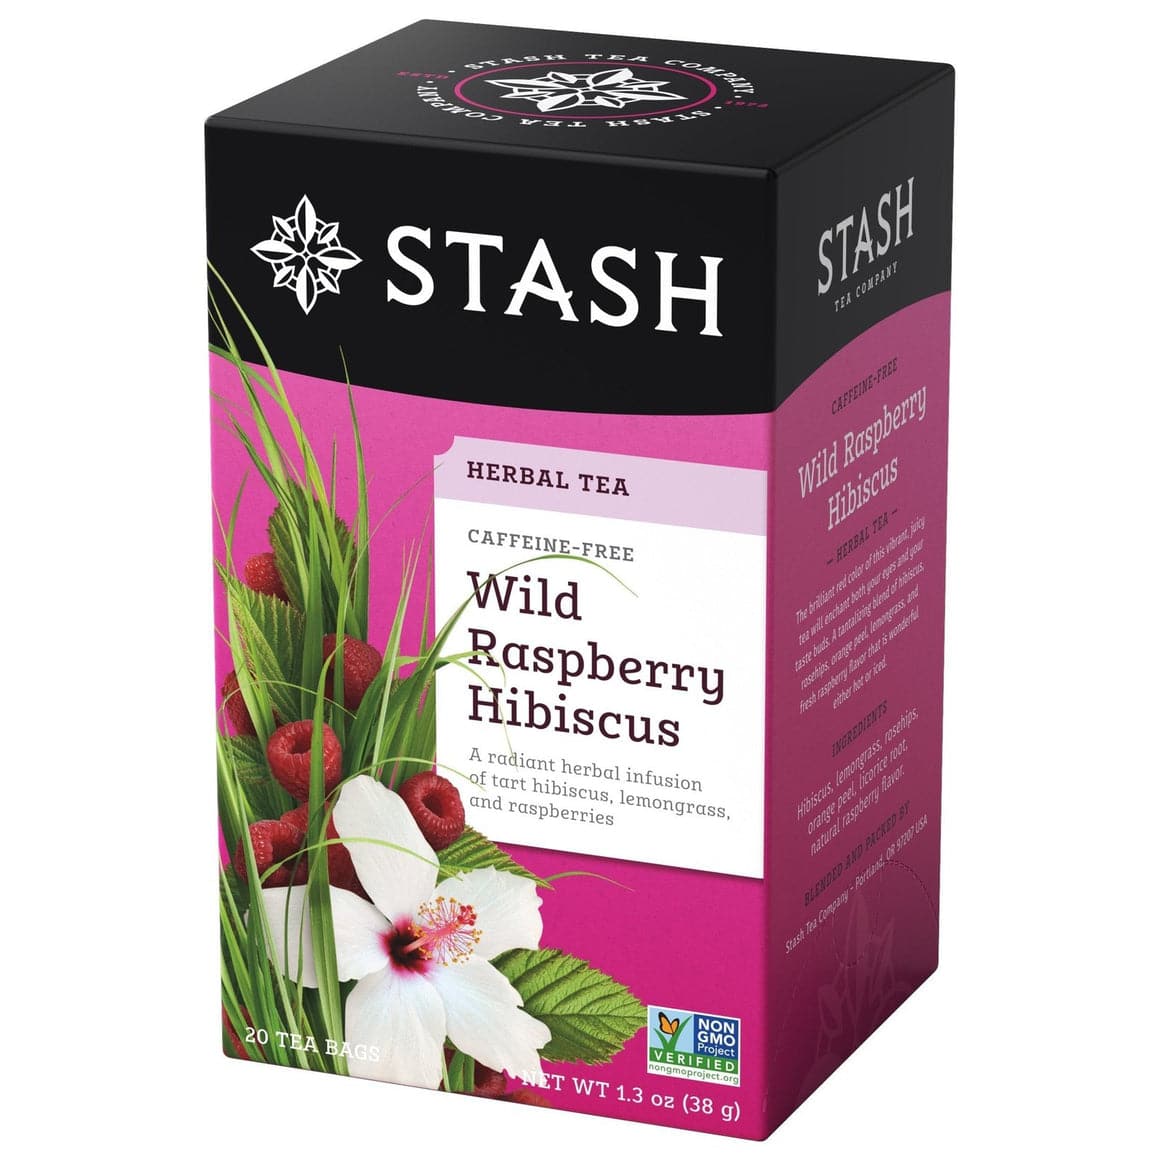 Stash Tea Wild Raspberry Hibiscus Tea Caffeine Free 20 Bag Pack of 6